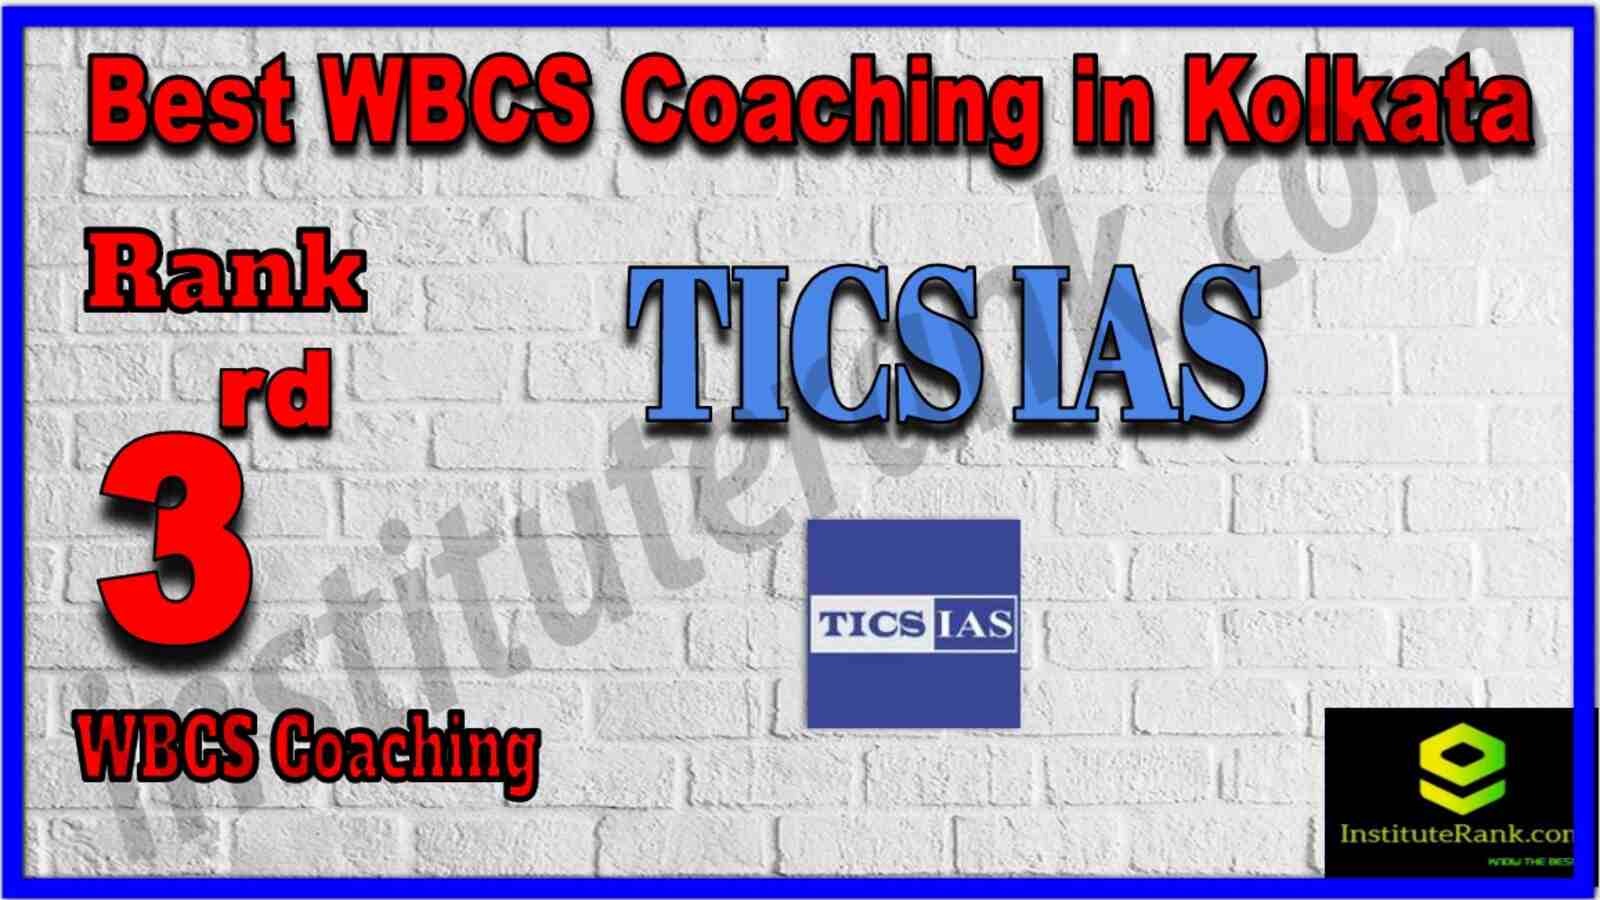 Rank 3 Best WBCS Coaching in Kolkata